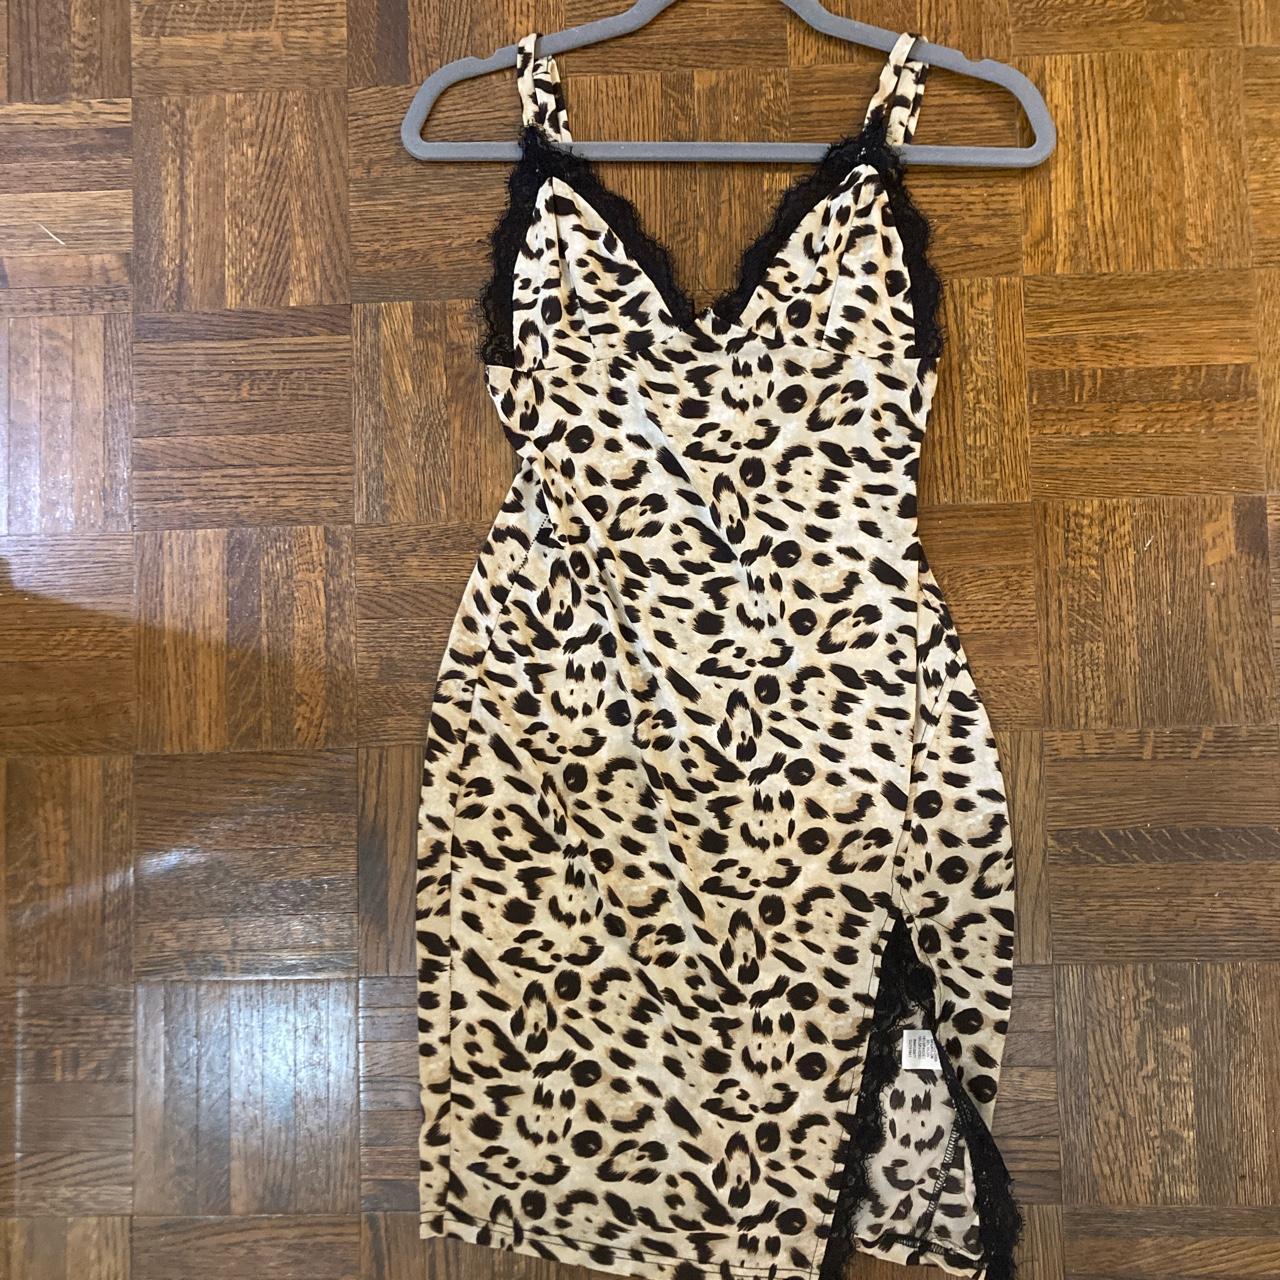 Small leopard/cheetah print lingerie slinky dress - Depop